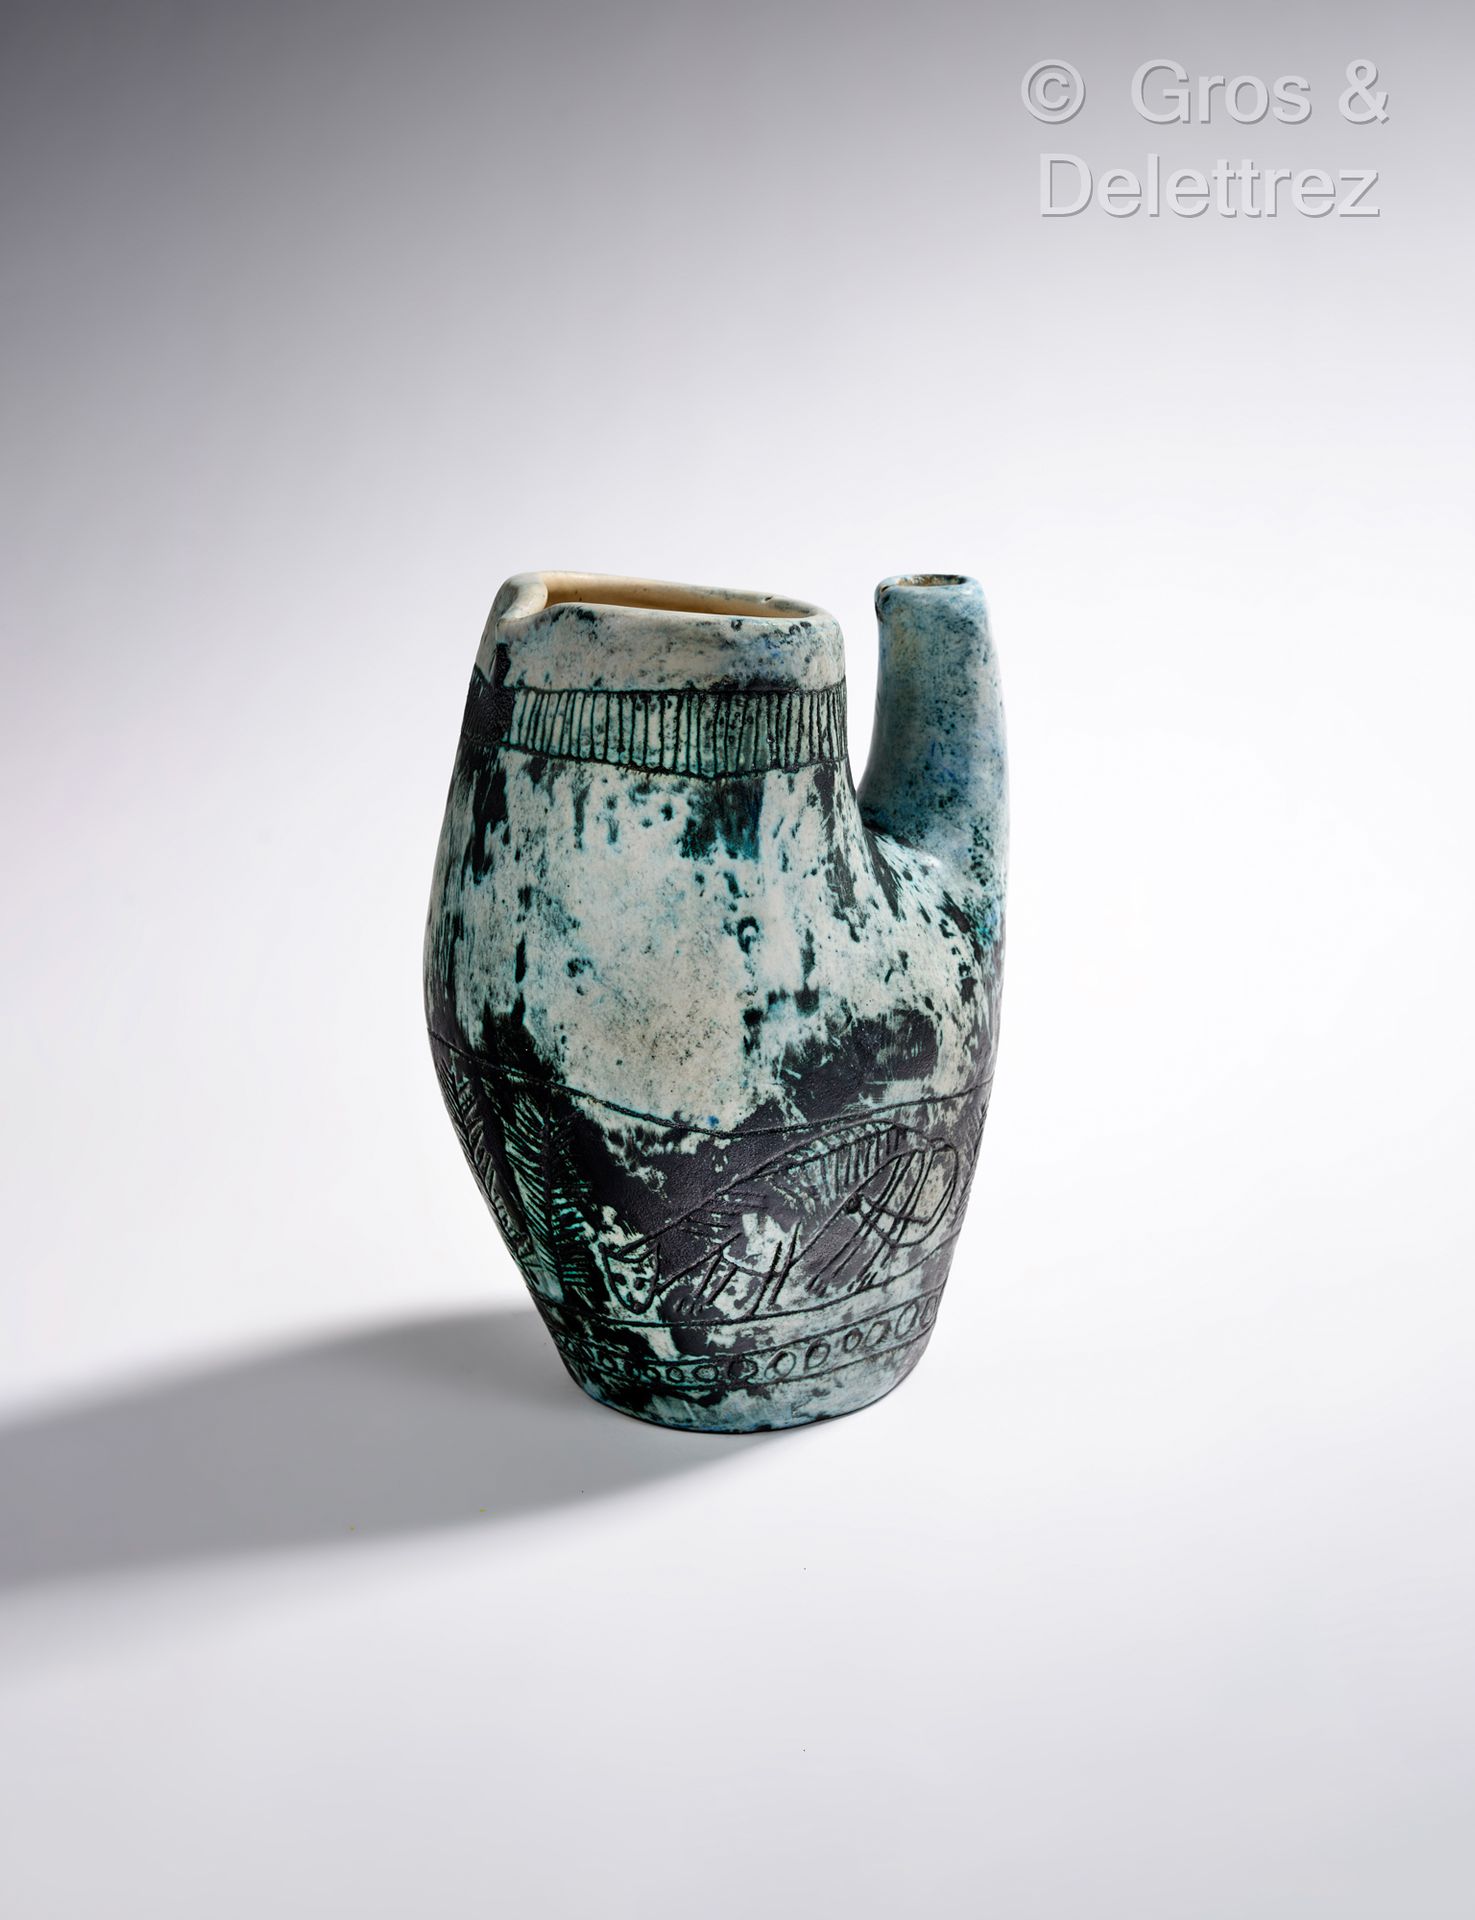 Null 雅克-布林 (1920-1995)
釉面陶瓷双体花瓶，装饰有神奇的动物。
签名为 "Jblin"。
大约在1960年。
高度：24.5厘米